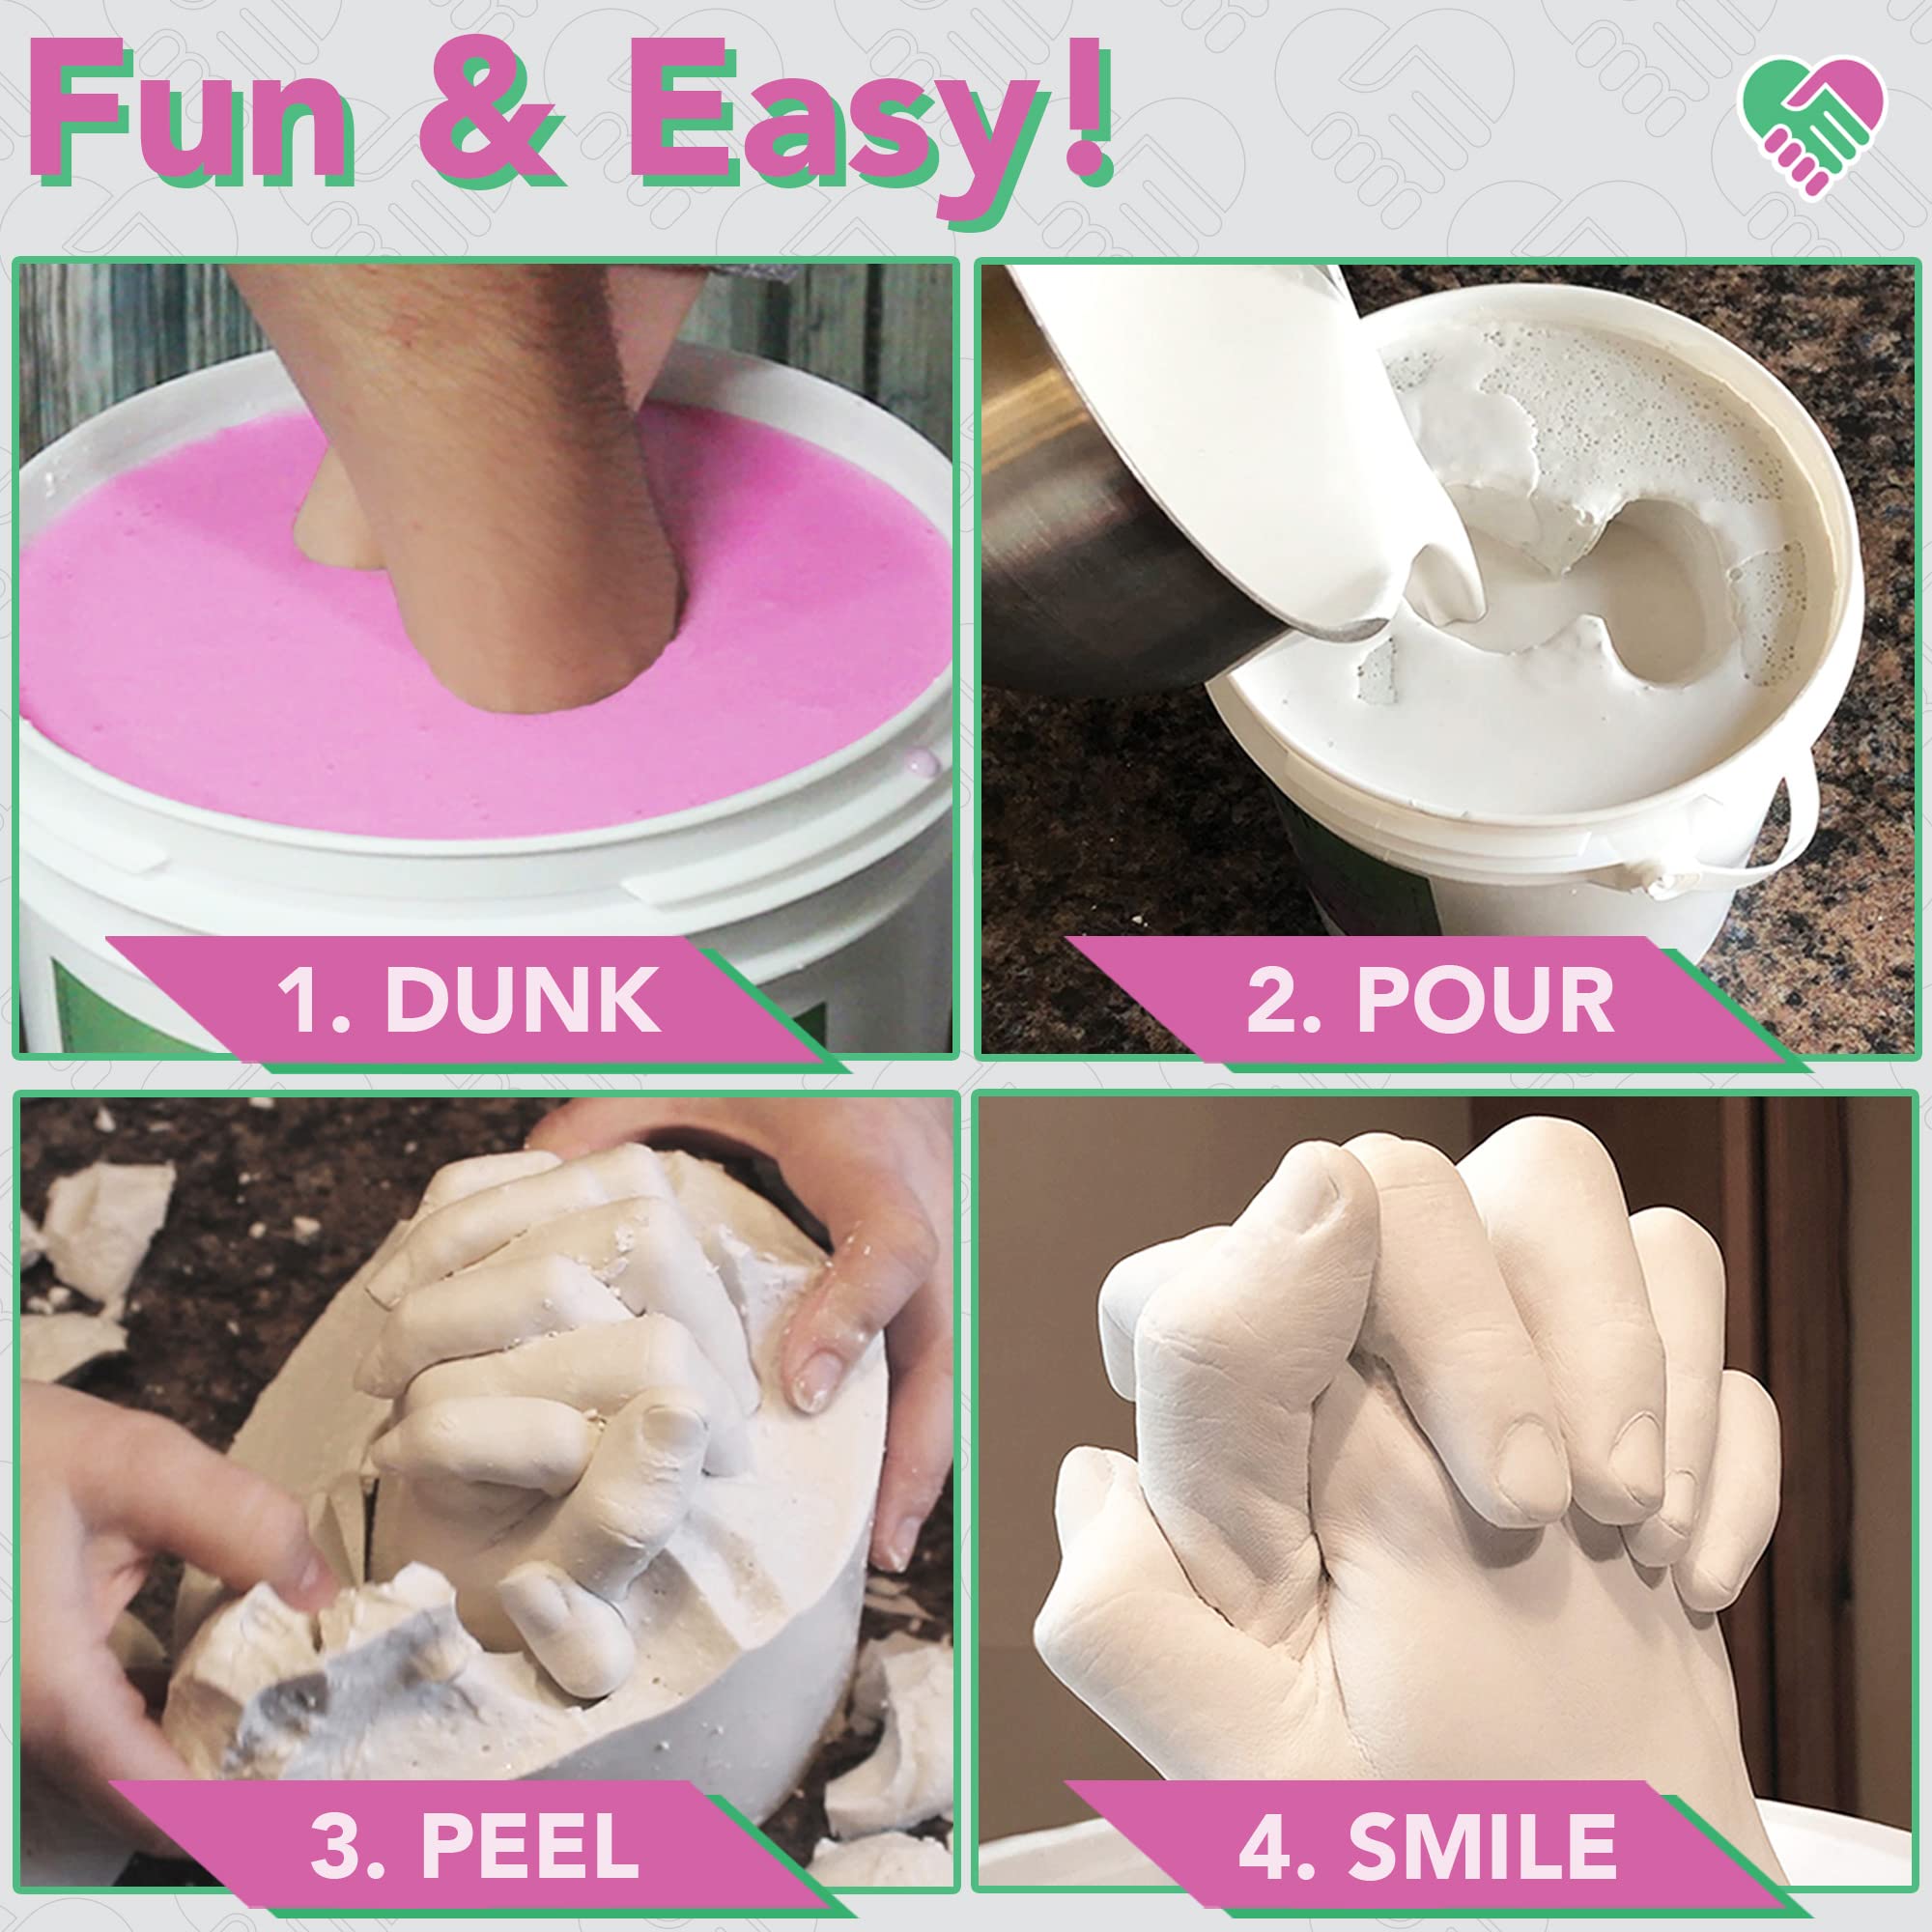 How to Make a Family Hand Casting 